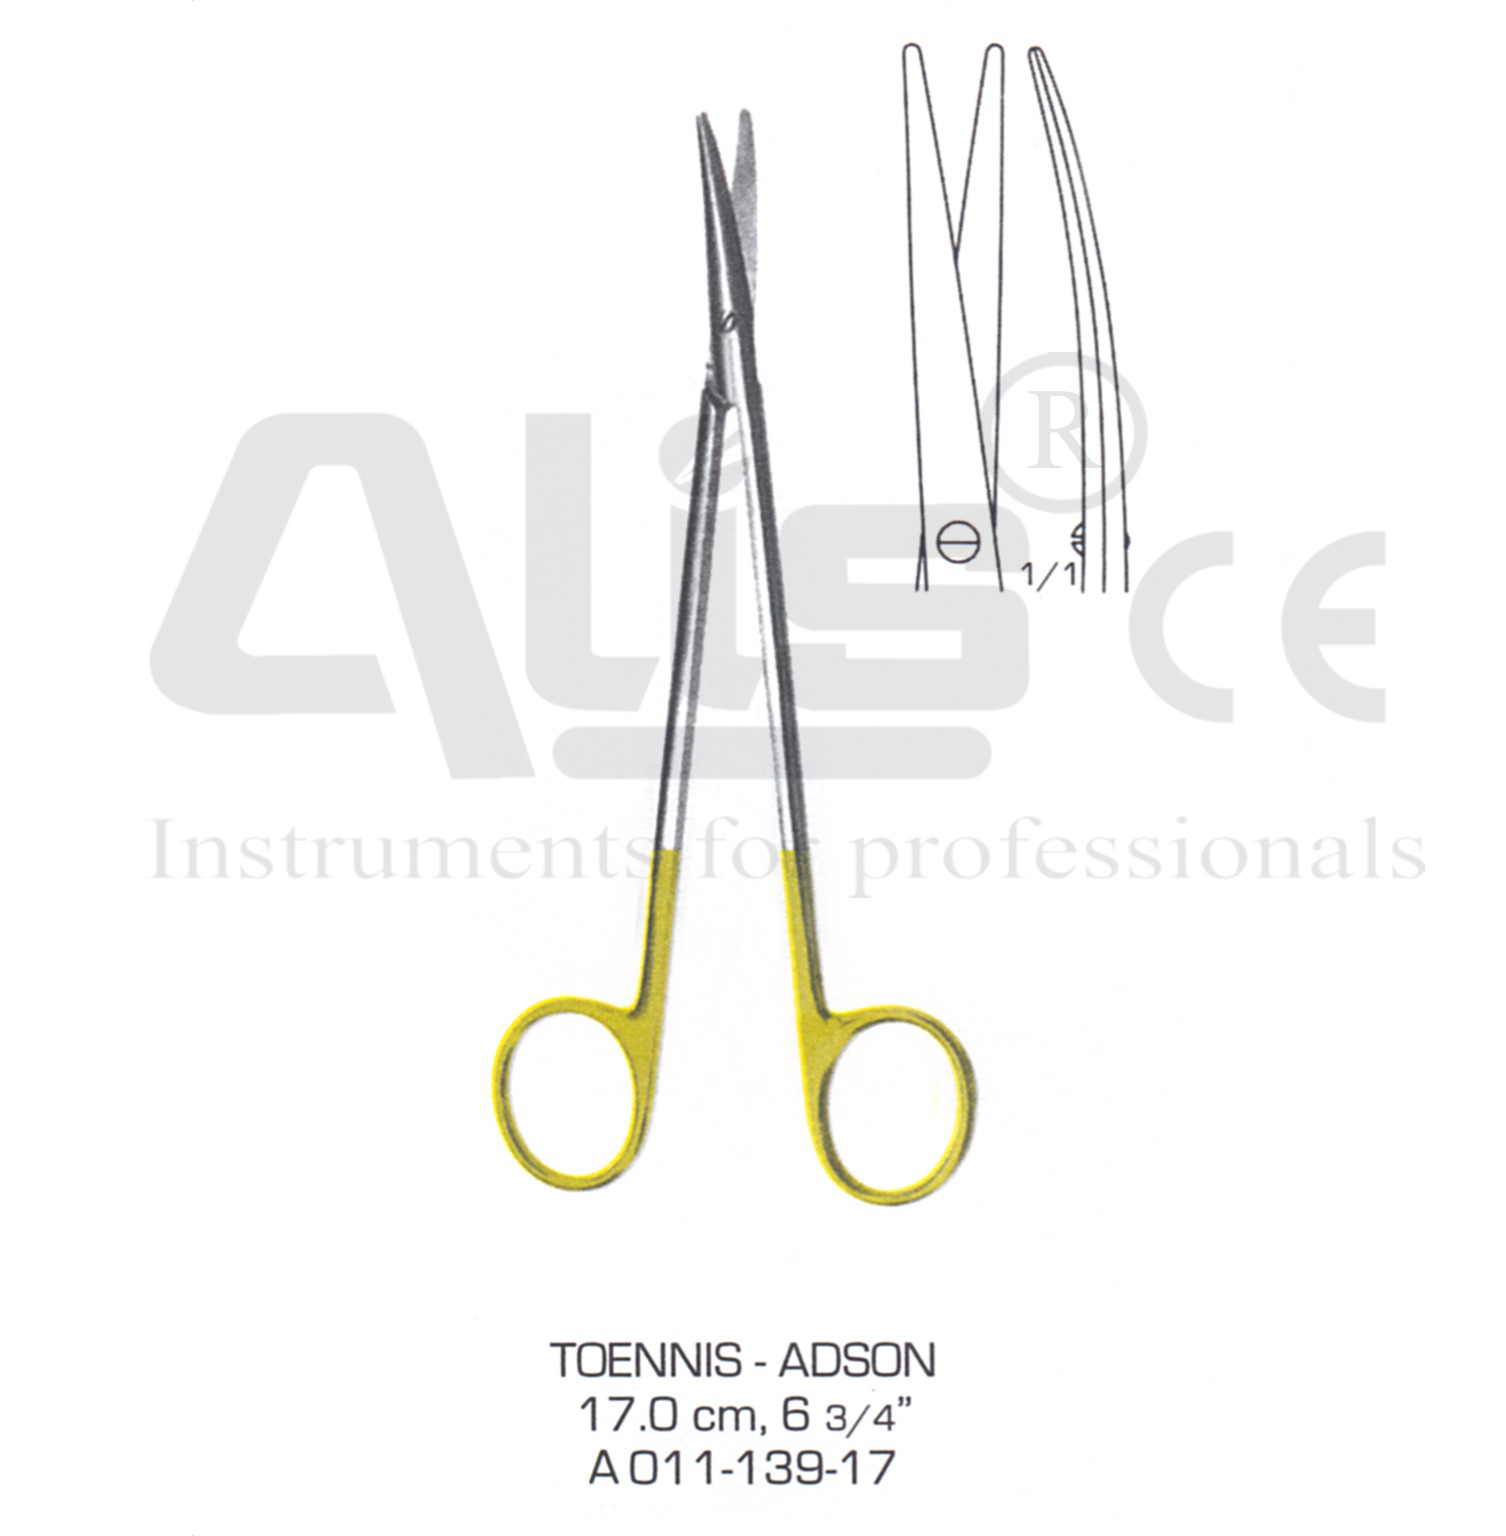 Toennis Adson surgical scissors with tungsten carbide edges